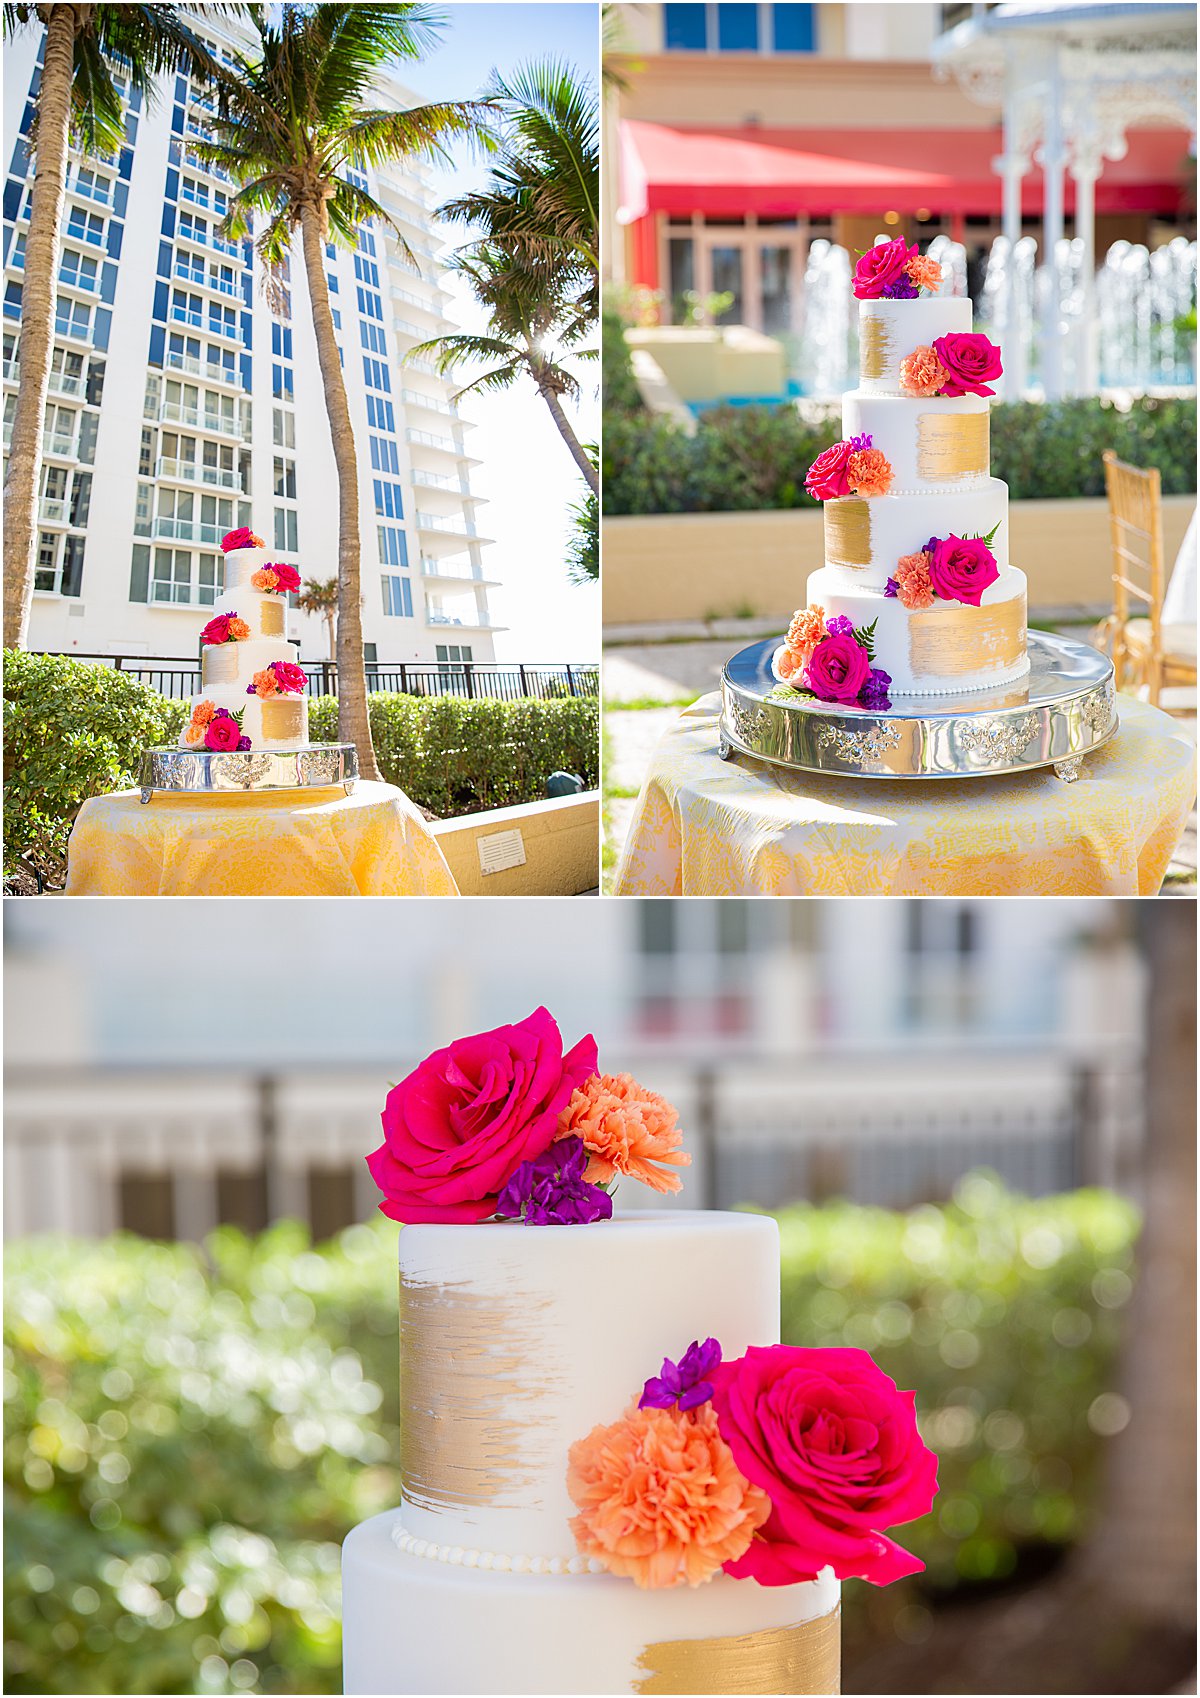 Tropical Chic Wedding Cake | Marriott Singer Island | Palm Beach, FL | Married in Palm Beach | www.marriedinpalmbeach.com | Krystal Zaskey Photography